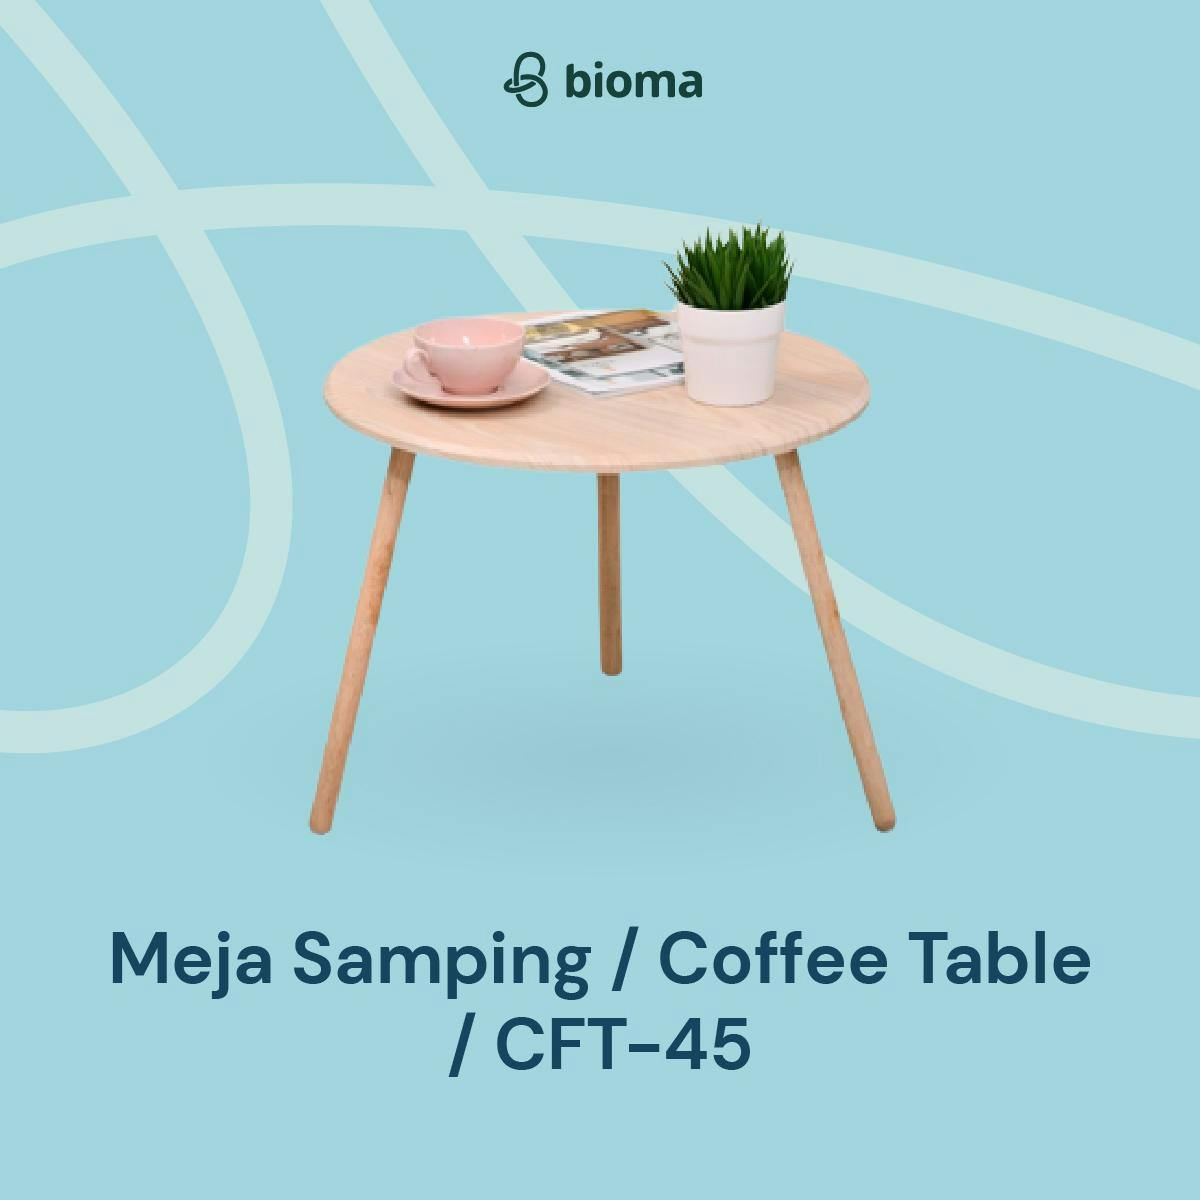 Image 475 Meja Samping / Coffee Table / CFT-45